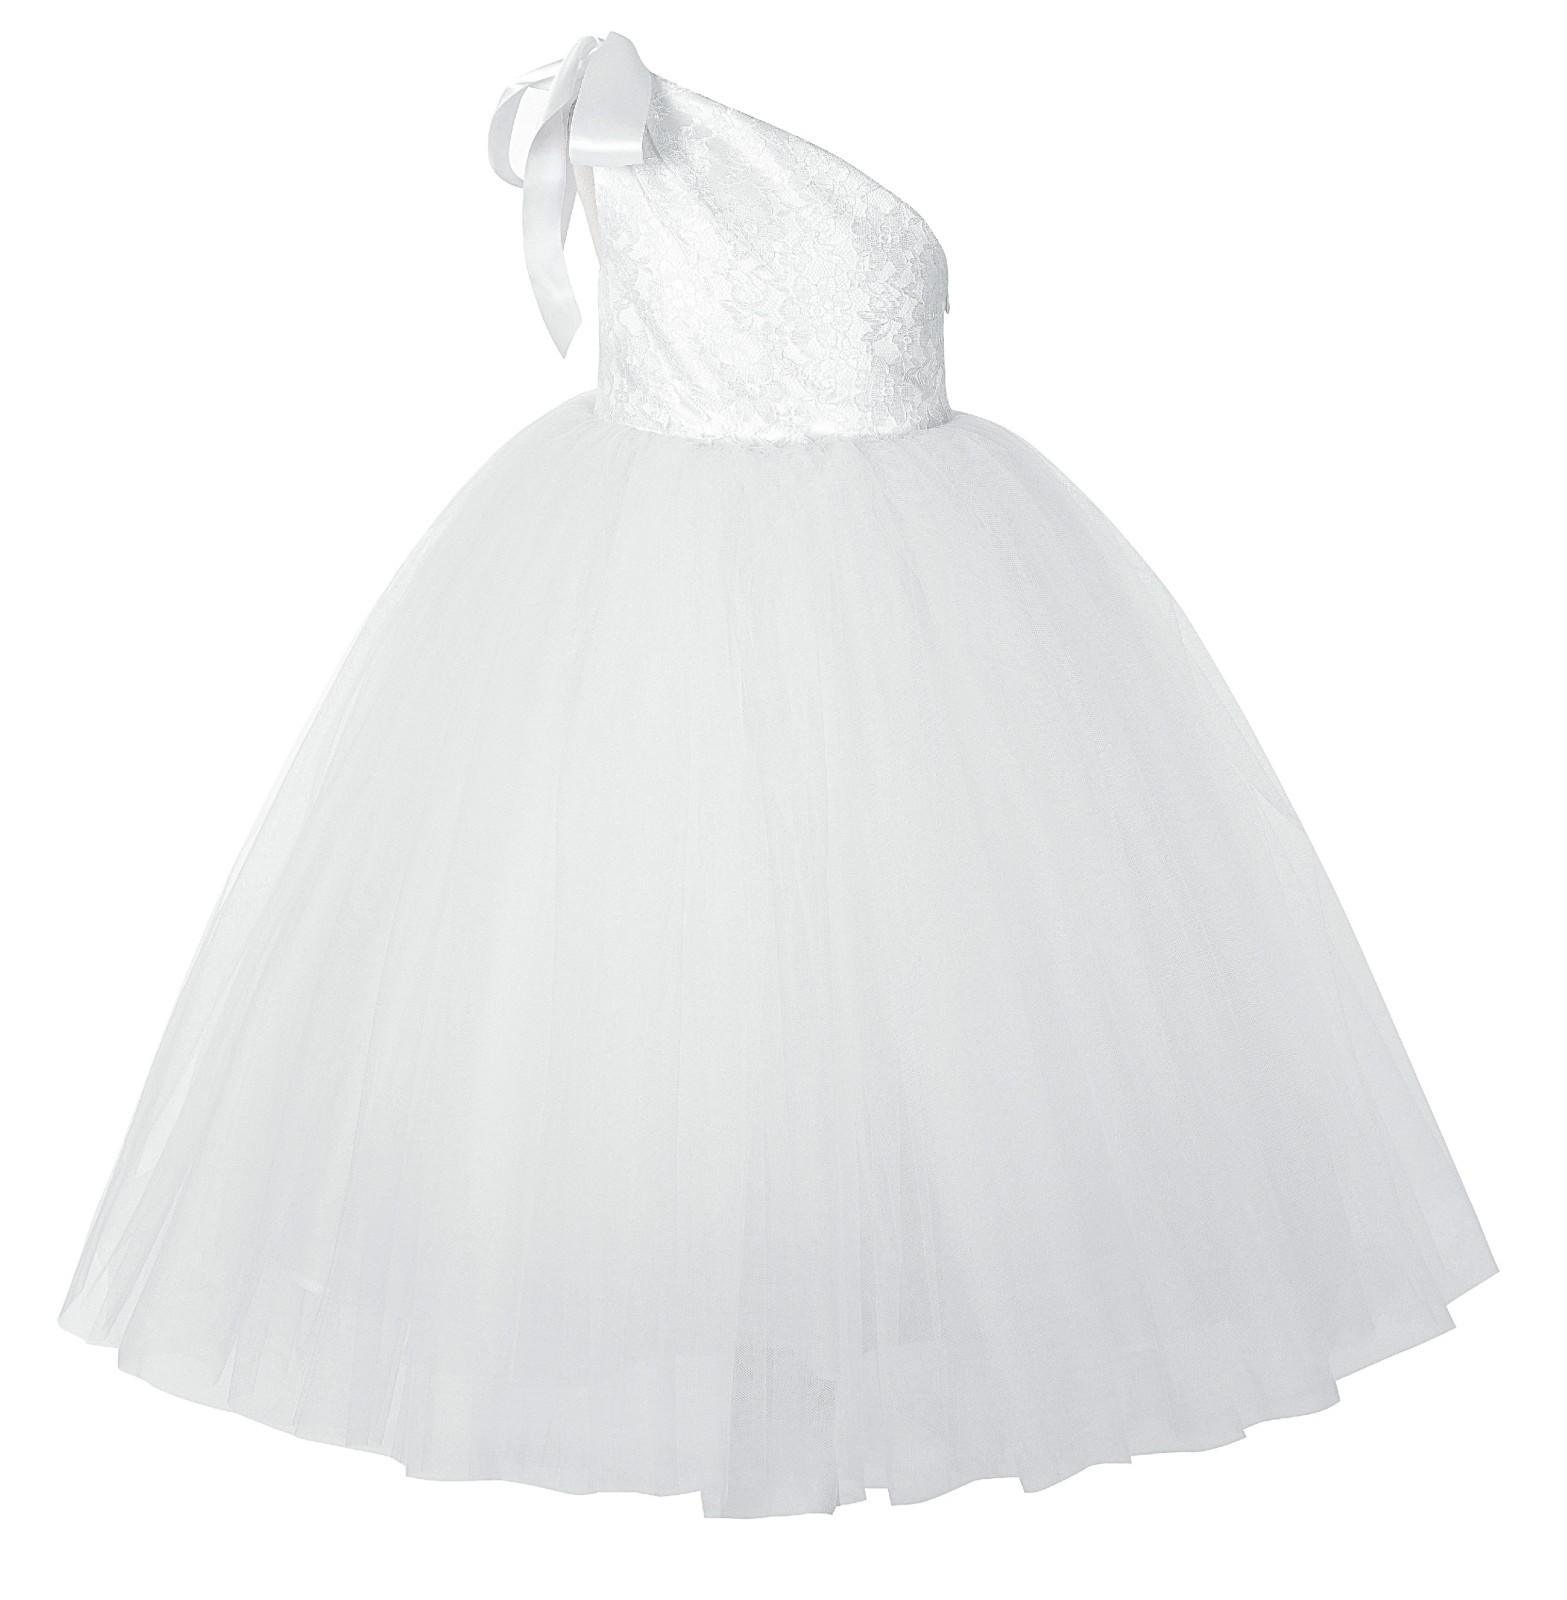 White One-Shoulder Lace Tutu Flower Girl Dress 182Lace